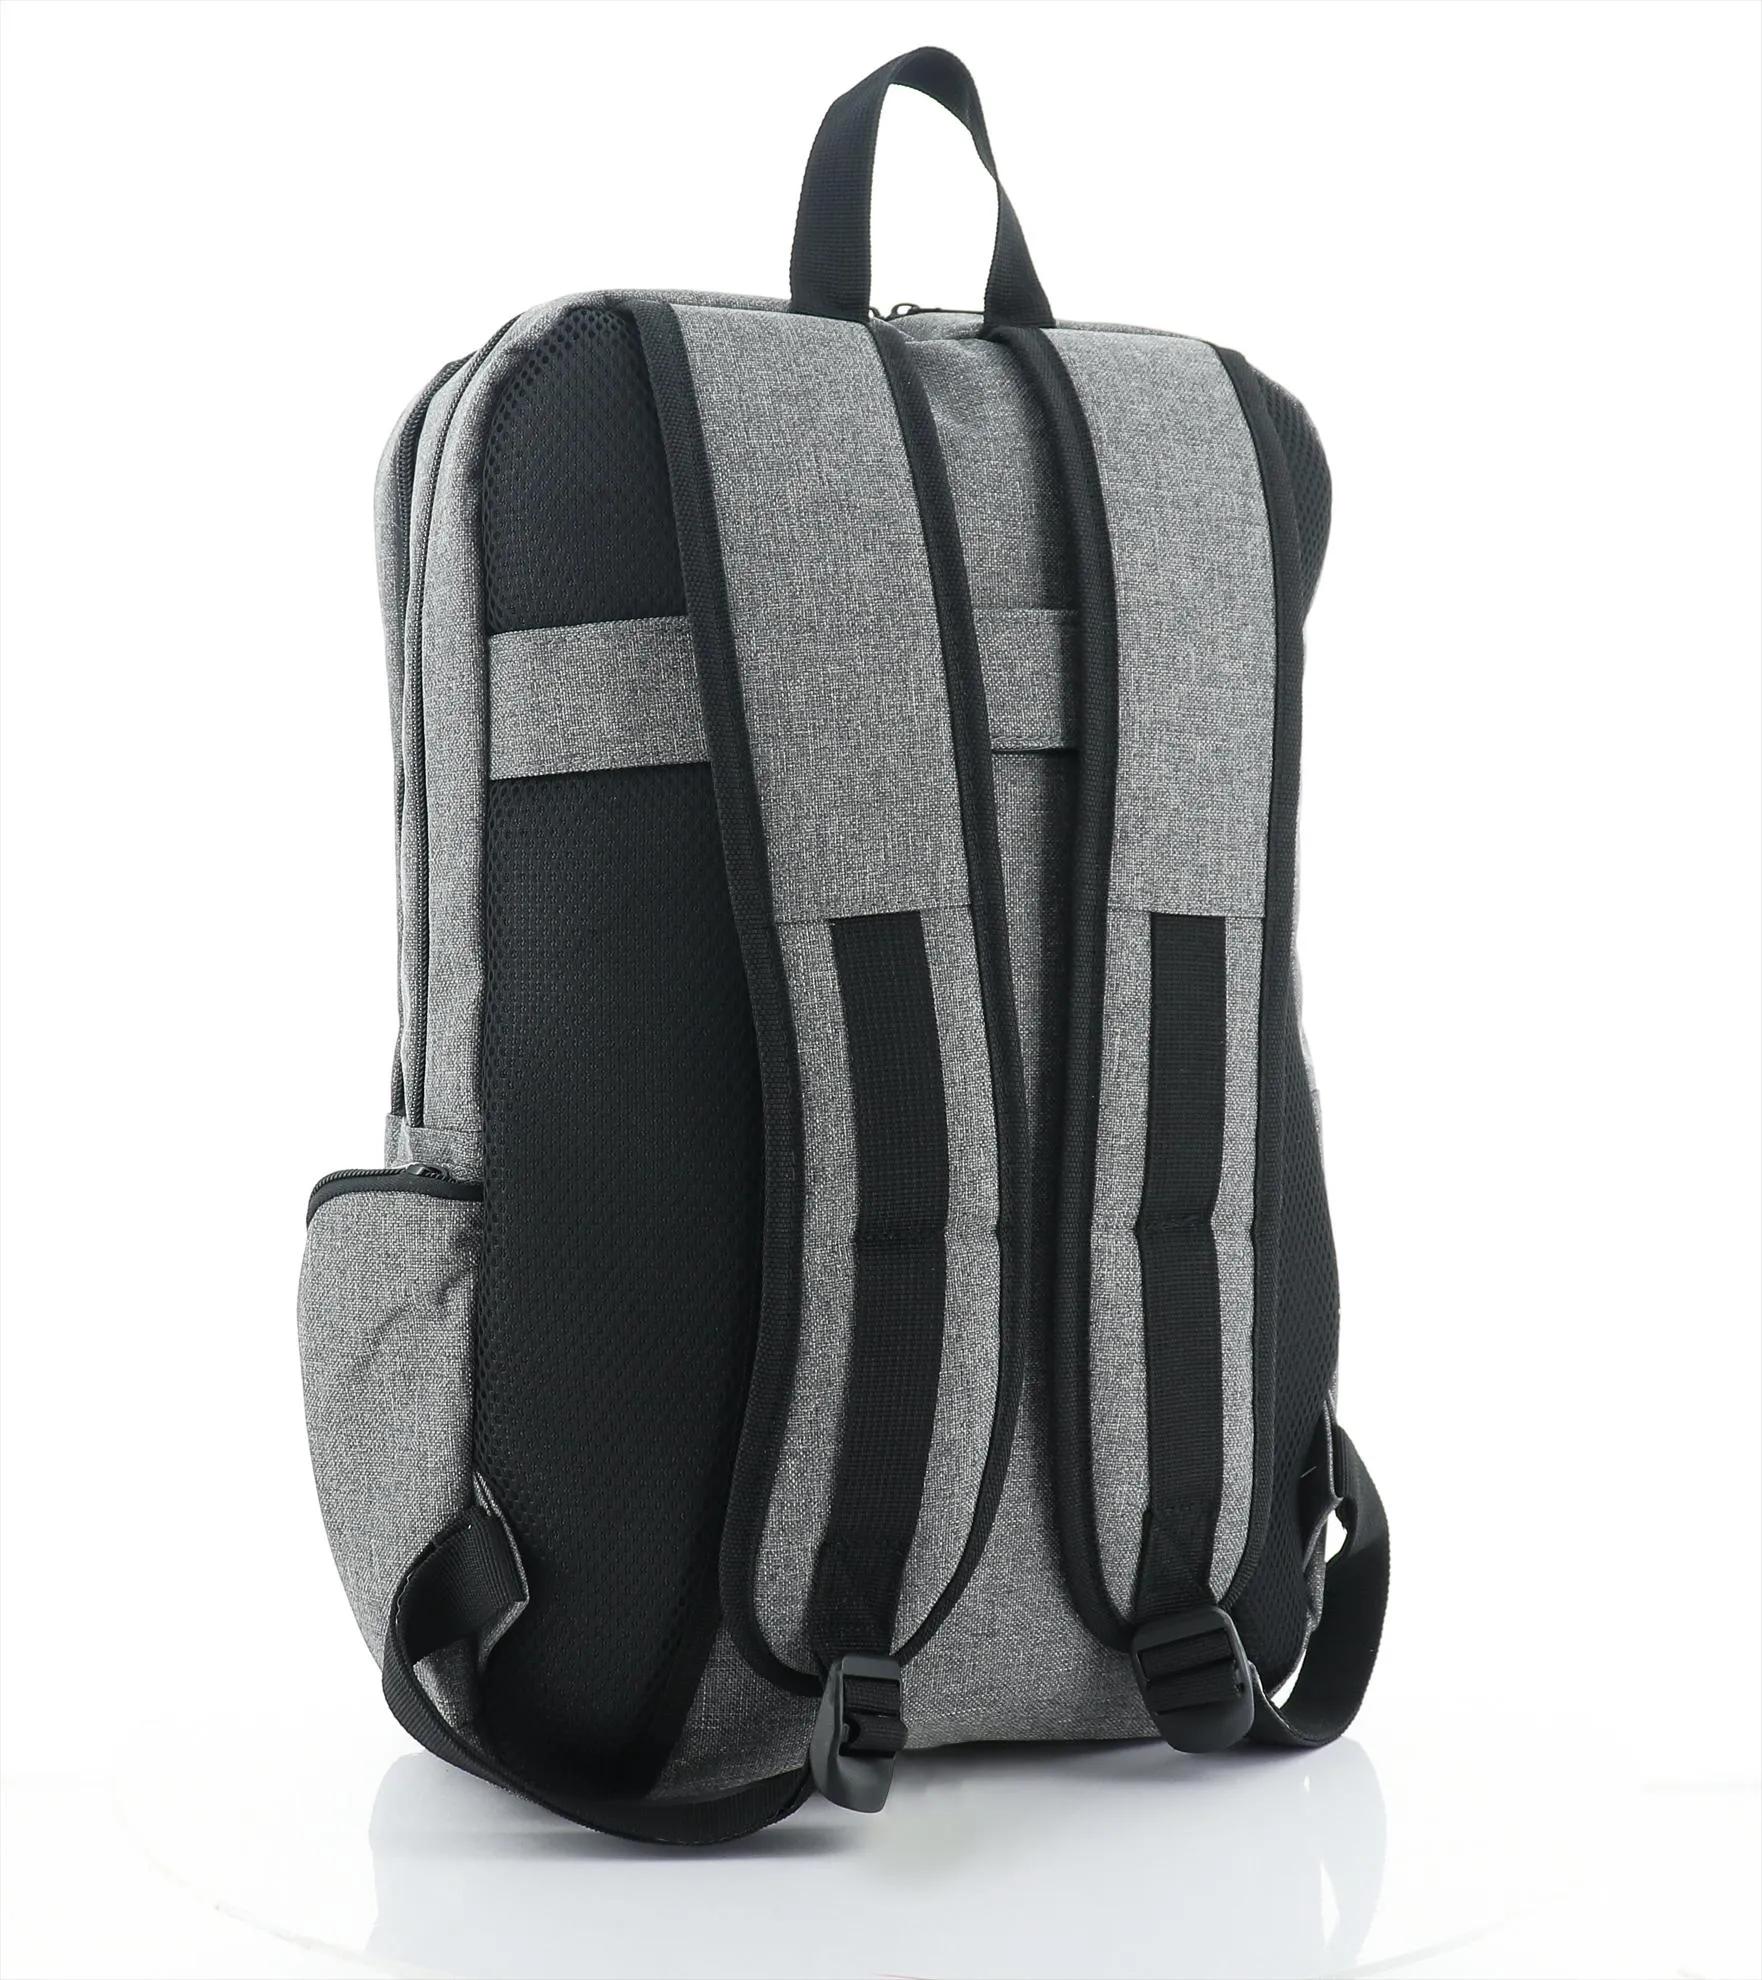 KAPSTON® Pierce Backpack 29 of 77